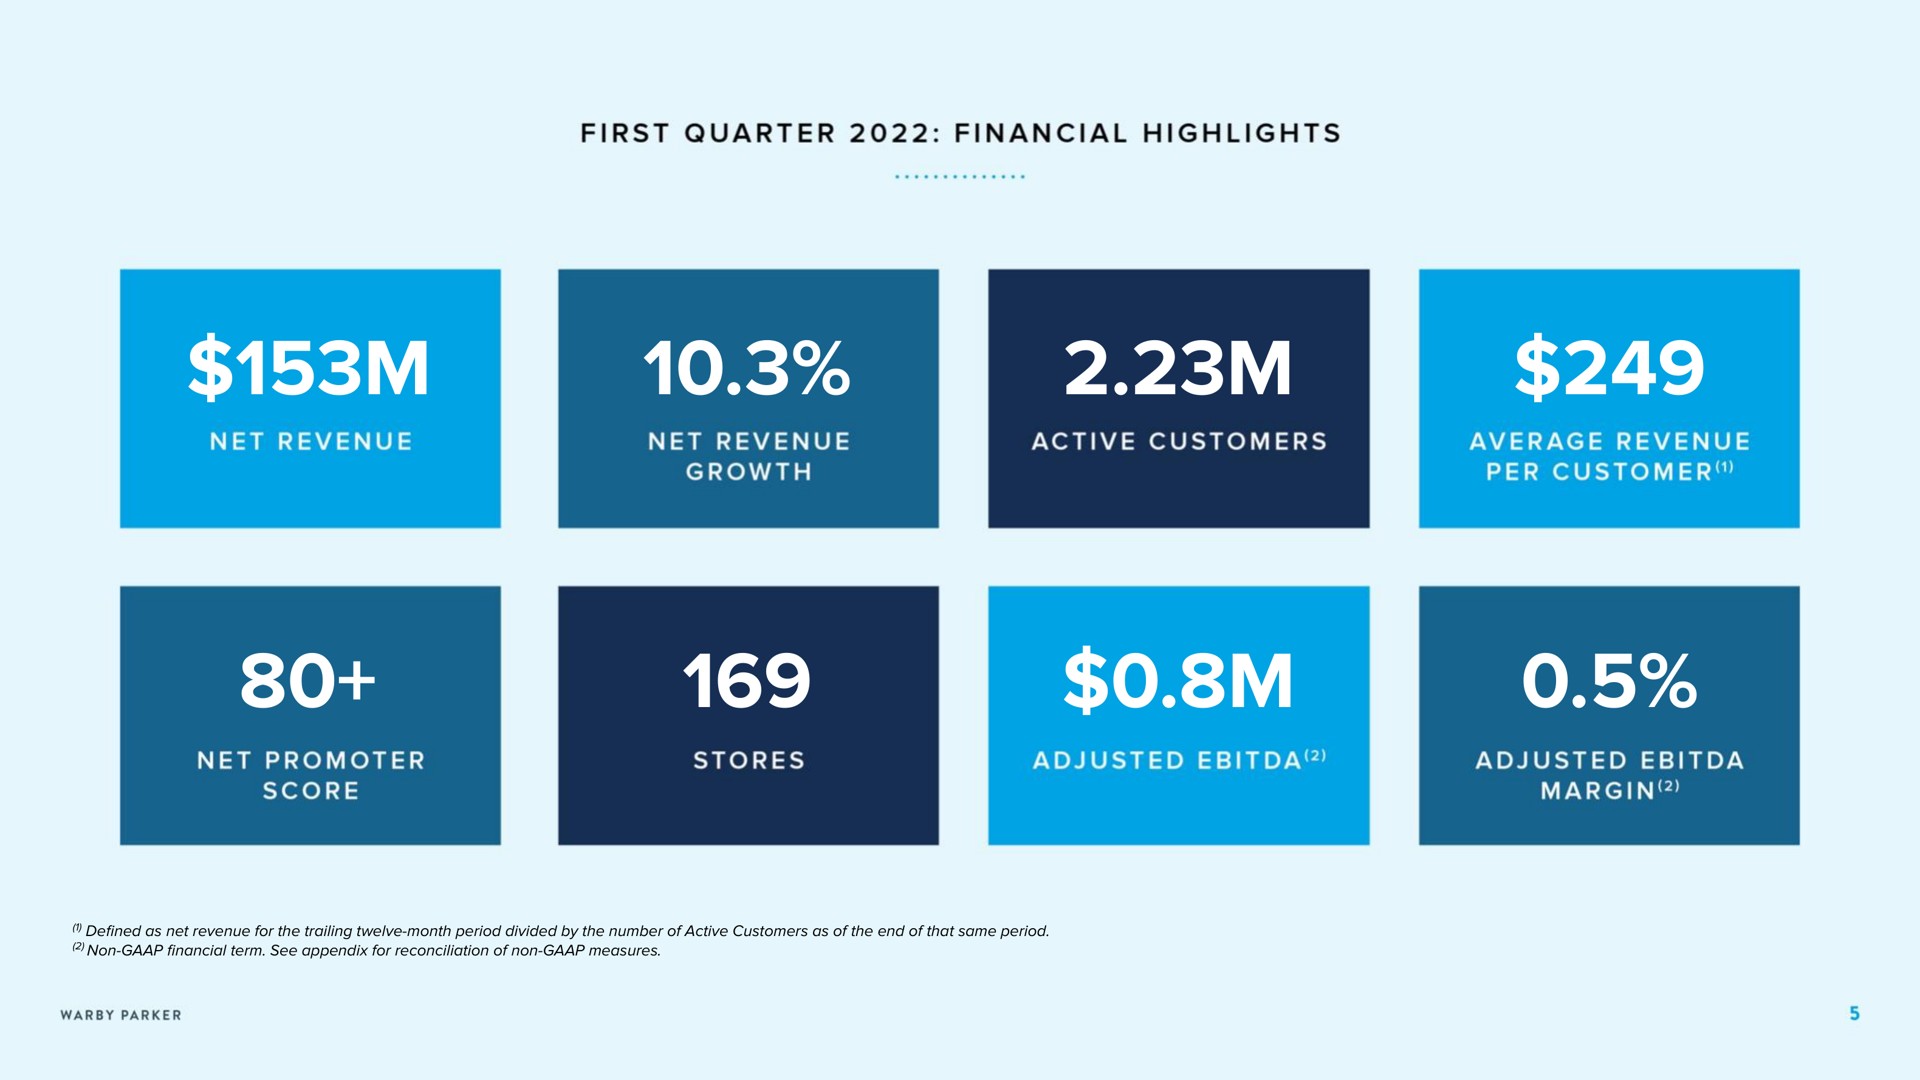 net revenue first quarter financial highlights margin average revenue per customer net promoter score net revenue growth so adjusted active customers adjusted stores | Warby Parker